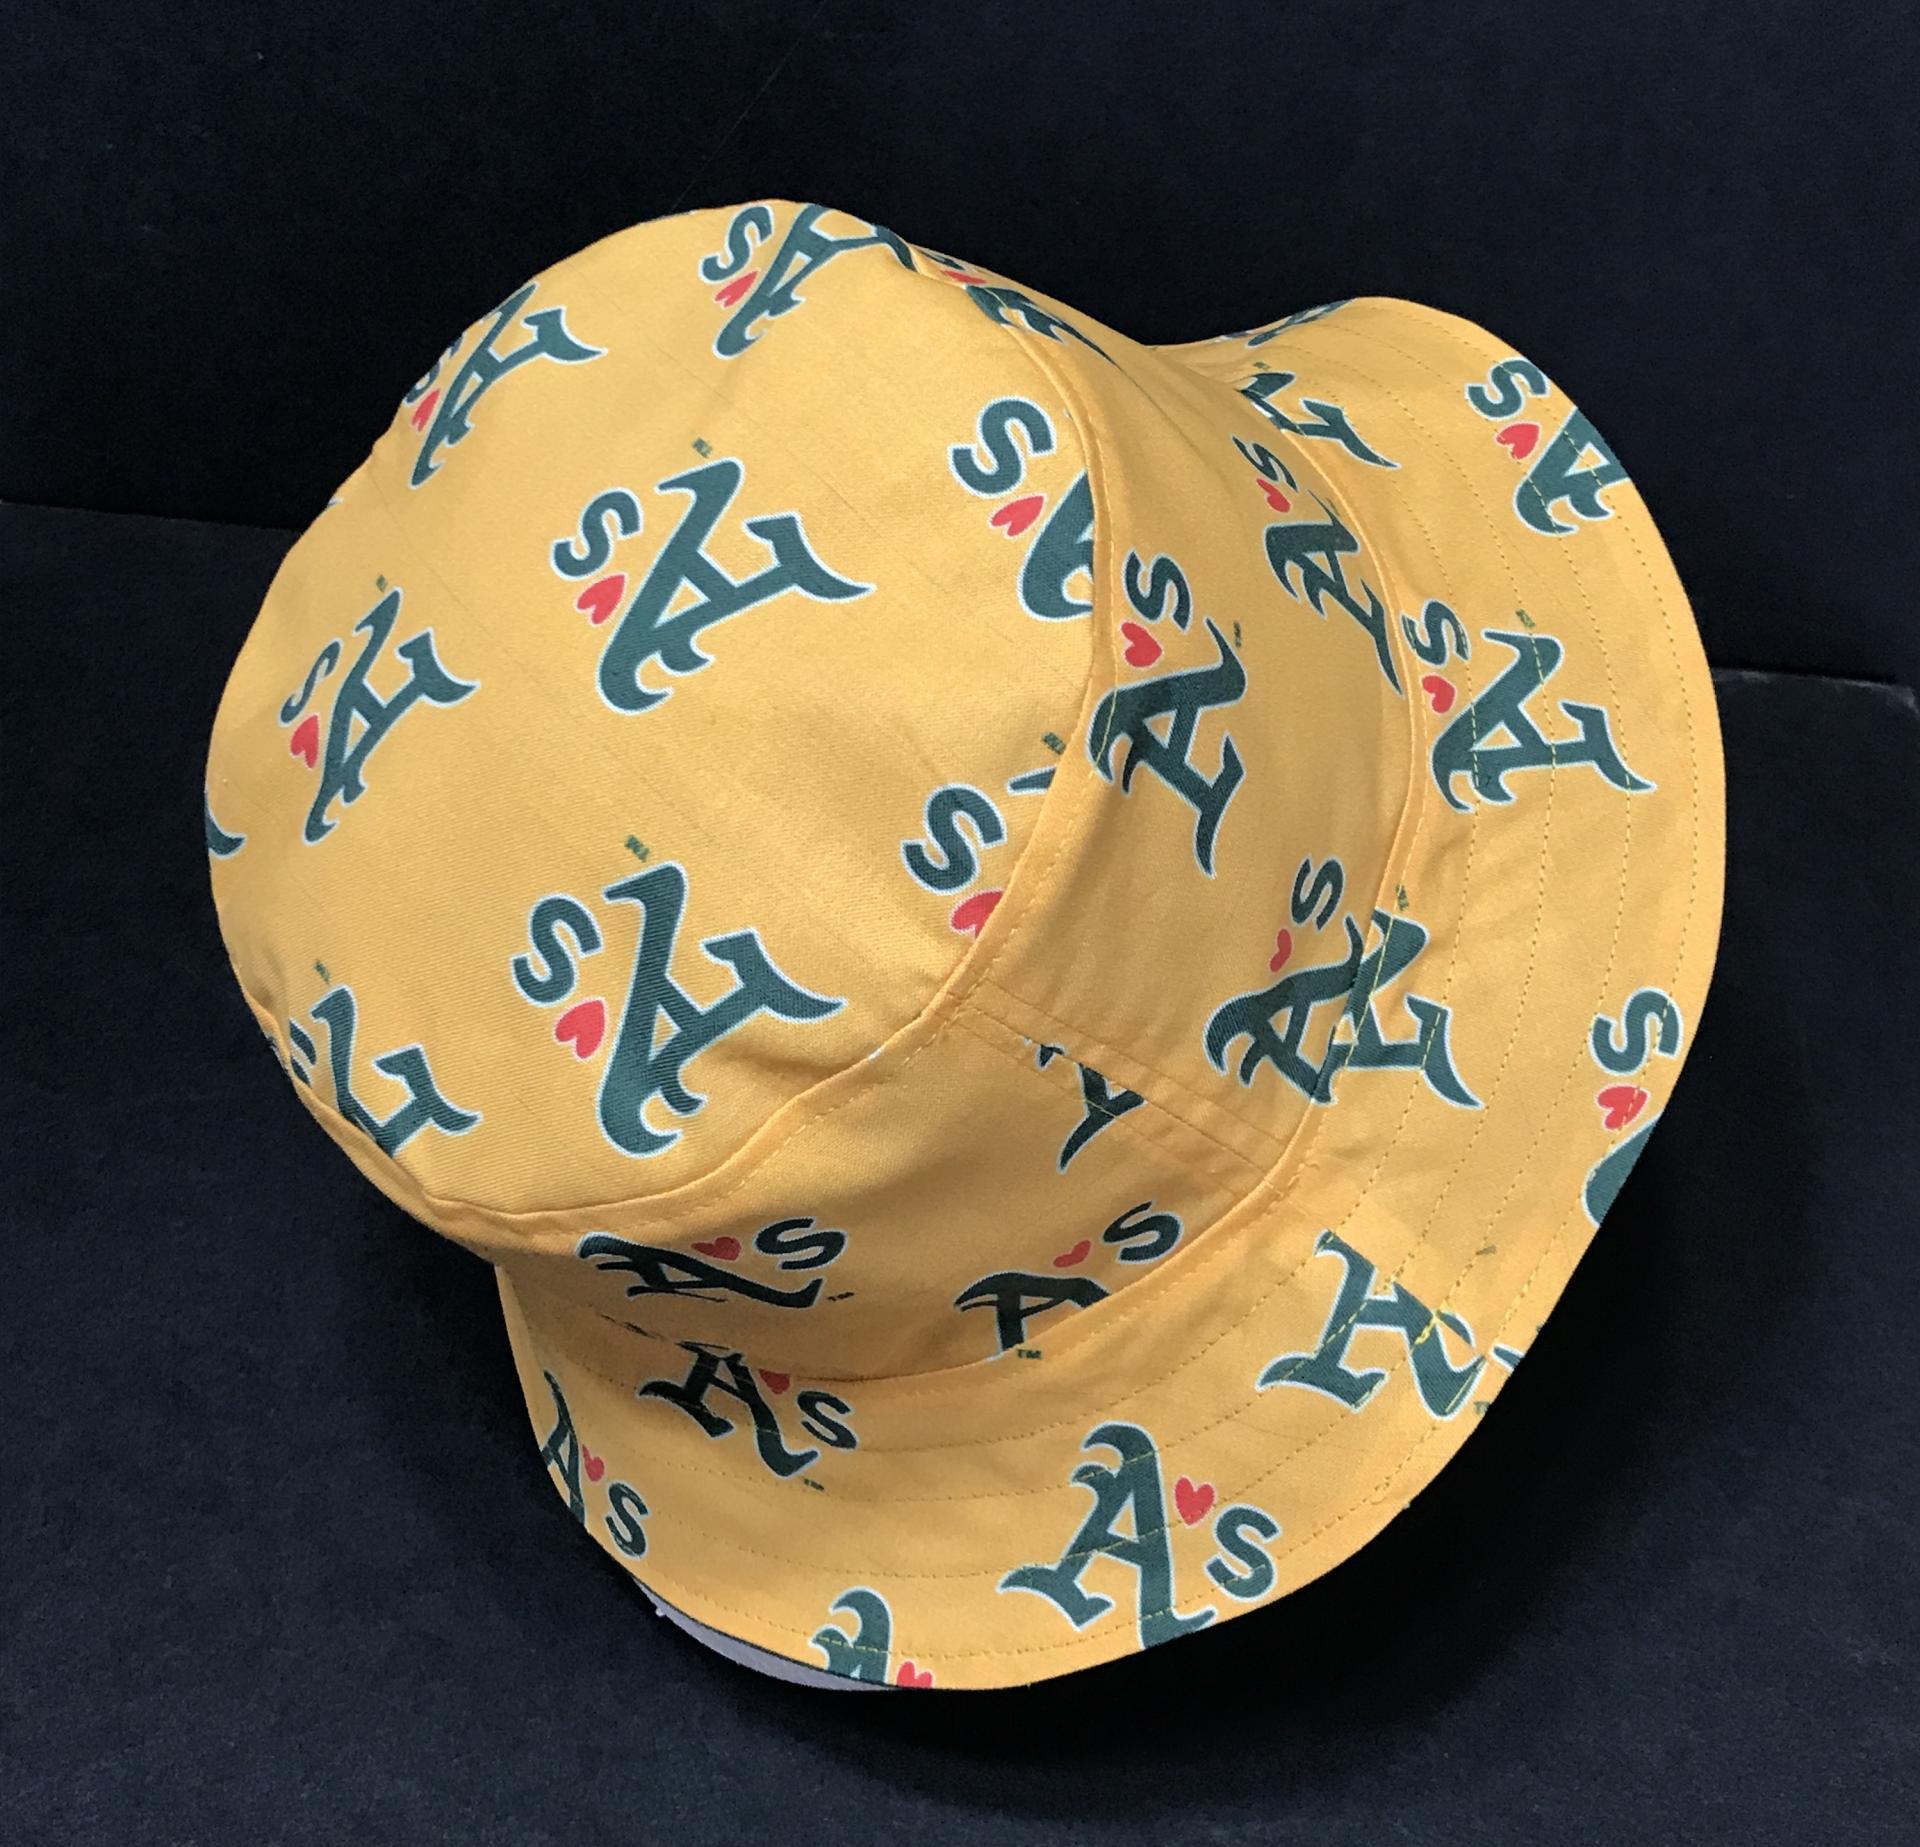 Oakland A’s Theme Bucket Hat, Golden Yellow, Reversible, Unisex Adult Sizes S-XXL, cotton, fishing hat, sun hat, floppy hat